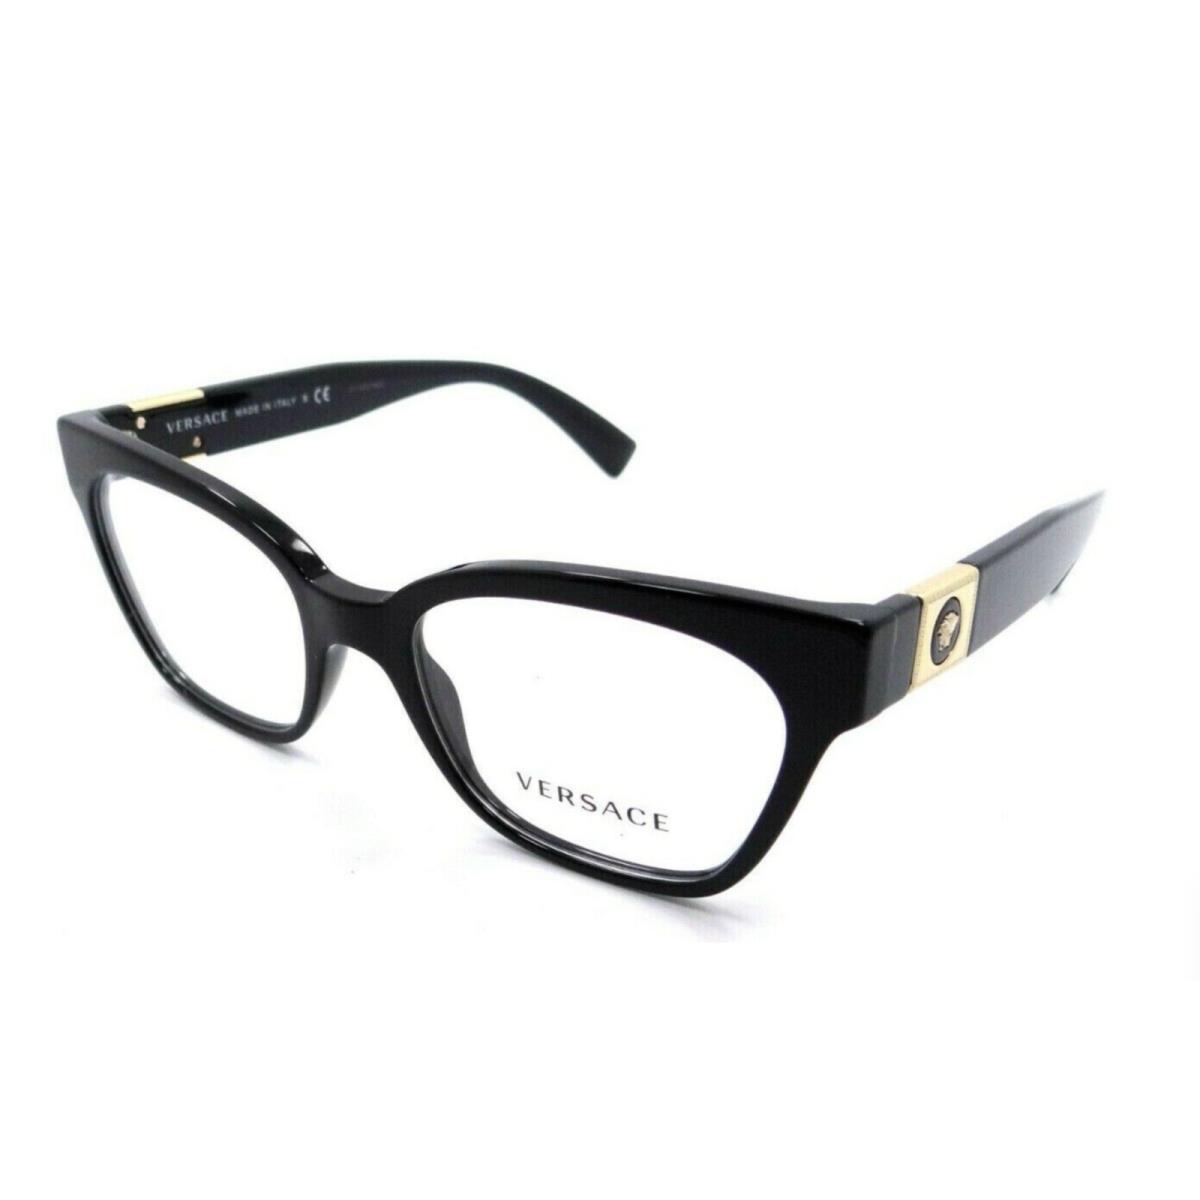 Versace Reading Glasses Mod. 3294 GB1 53-18 140 Black Gold Frames Readers